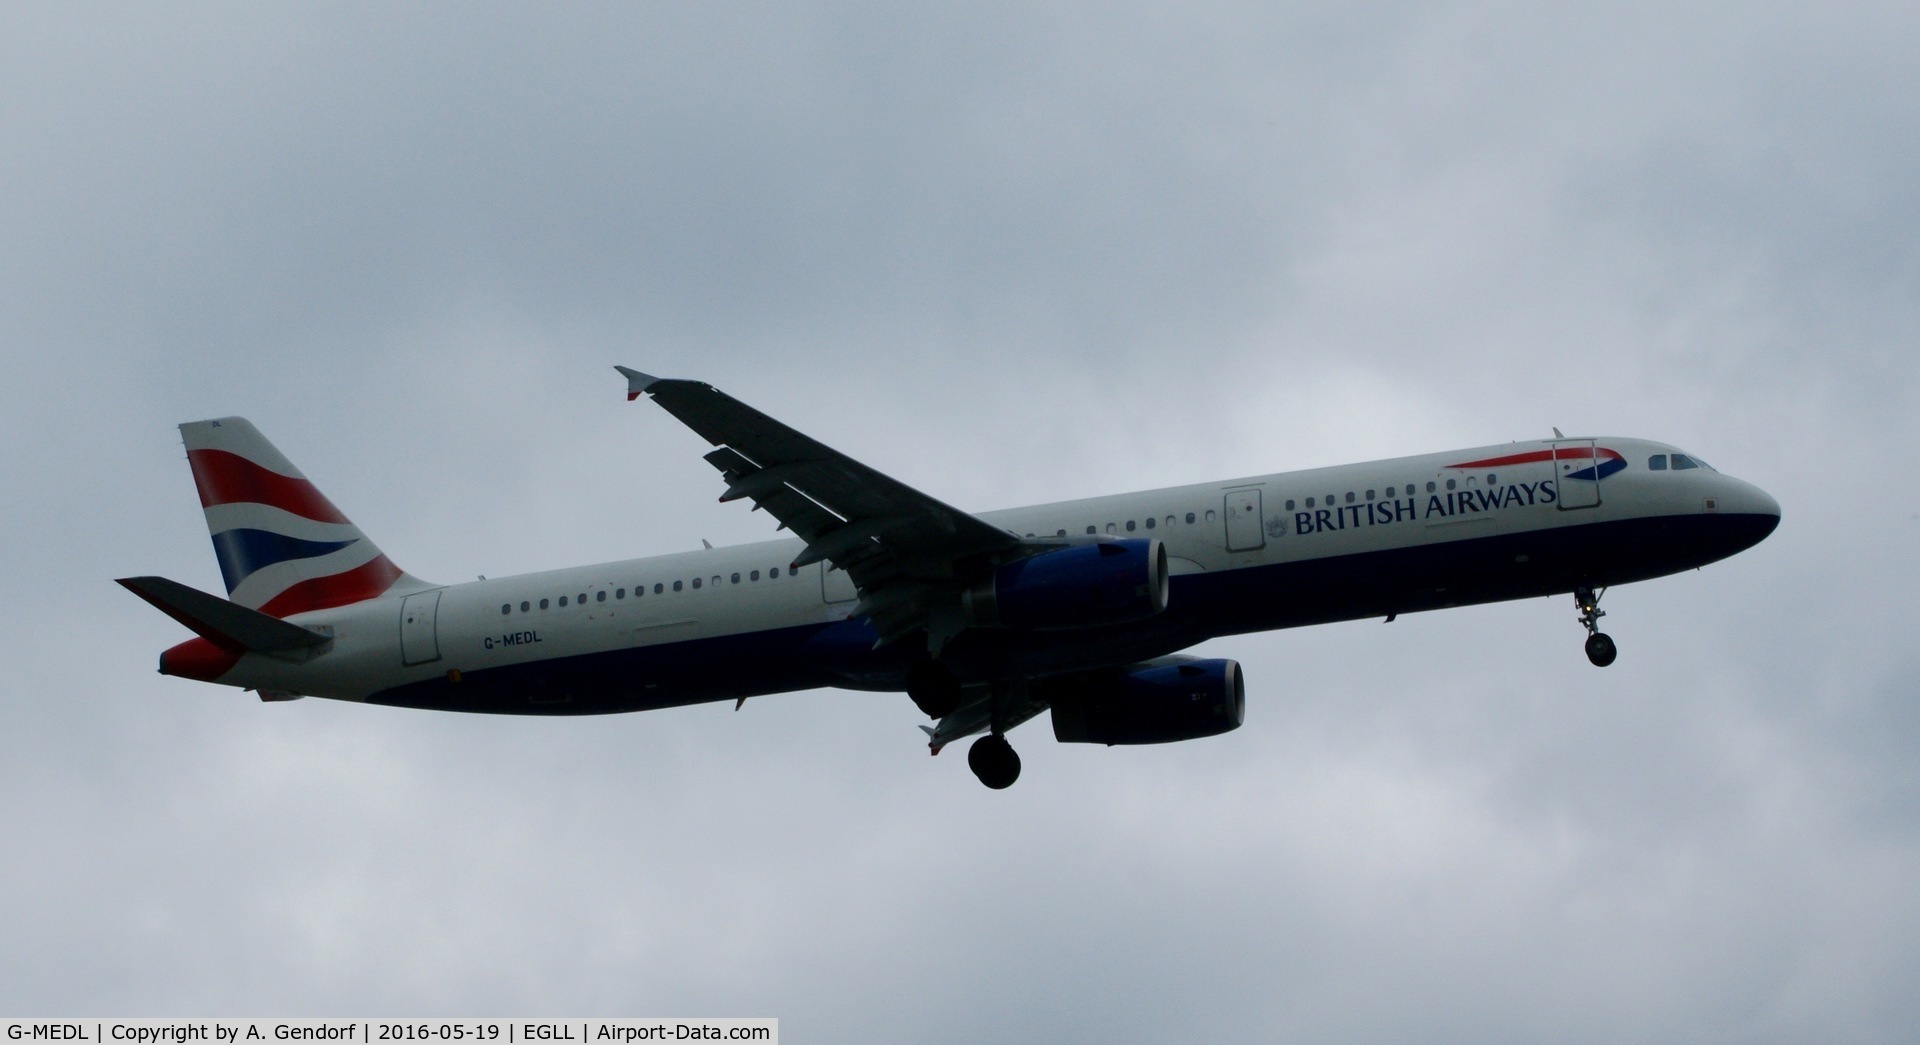 G-MEDL, 2006 Airbus A321-231 C/N 2653, British Airways, is here approaching RWY 27R at London Heathrow(EGLL)